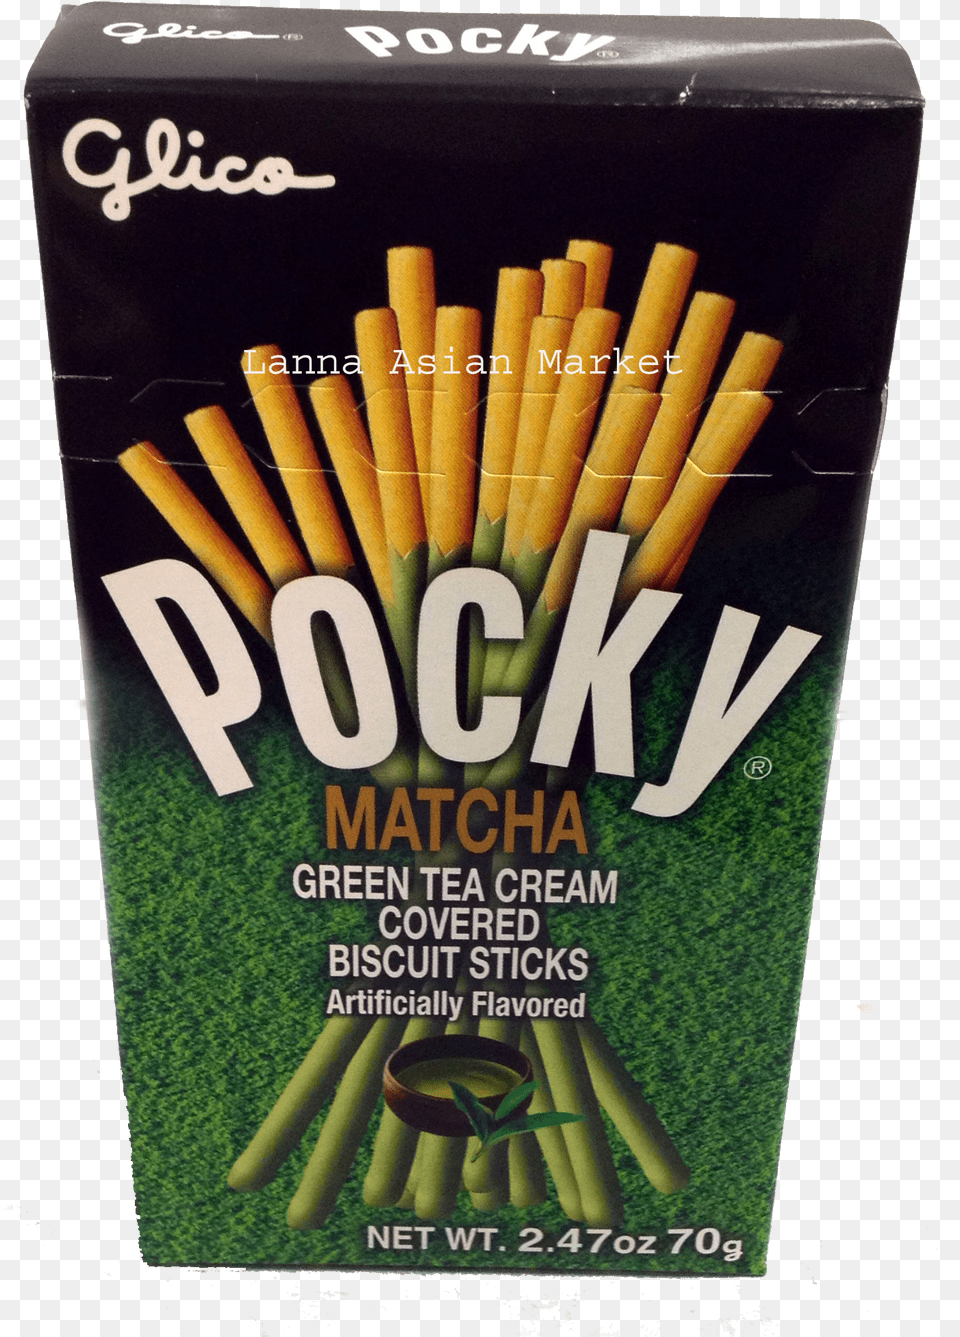 Green Tea Matcha Pocky, Advertisement, Poster, Book, Publication Png